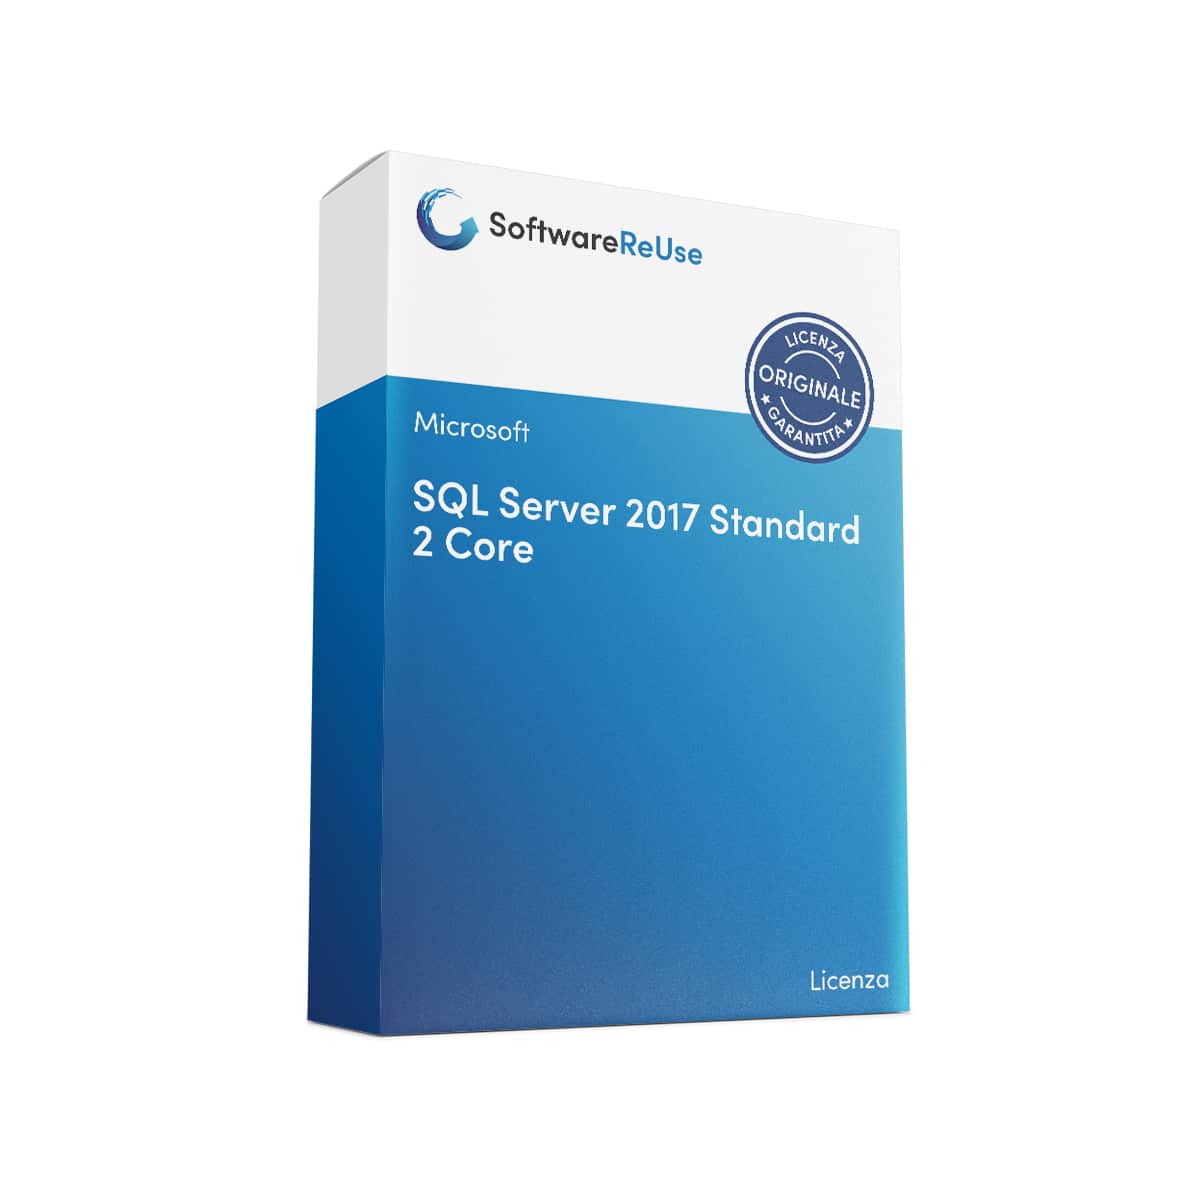 SQL Server 2017 Standard 2 Core IT